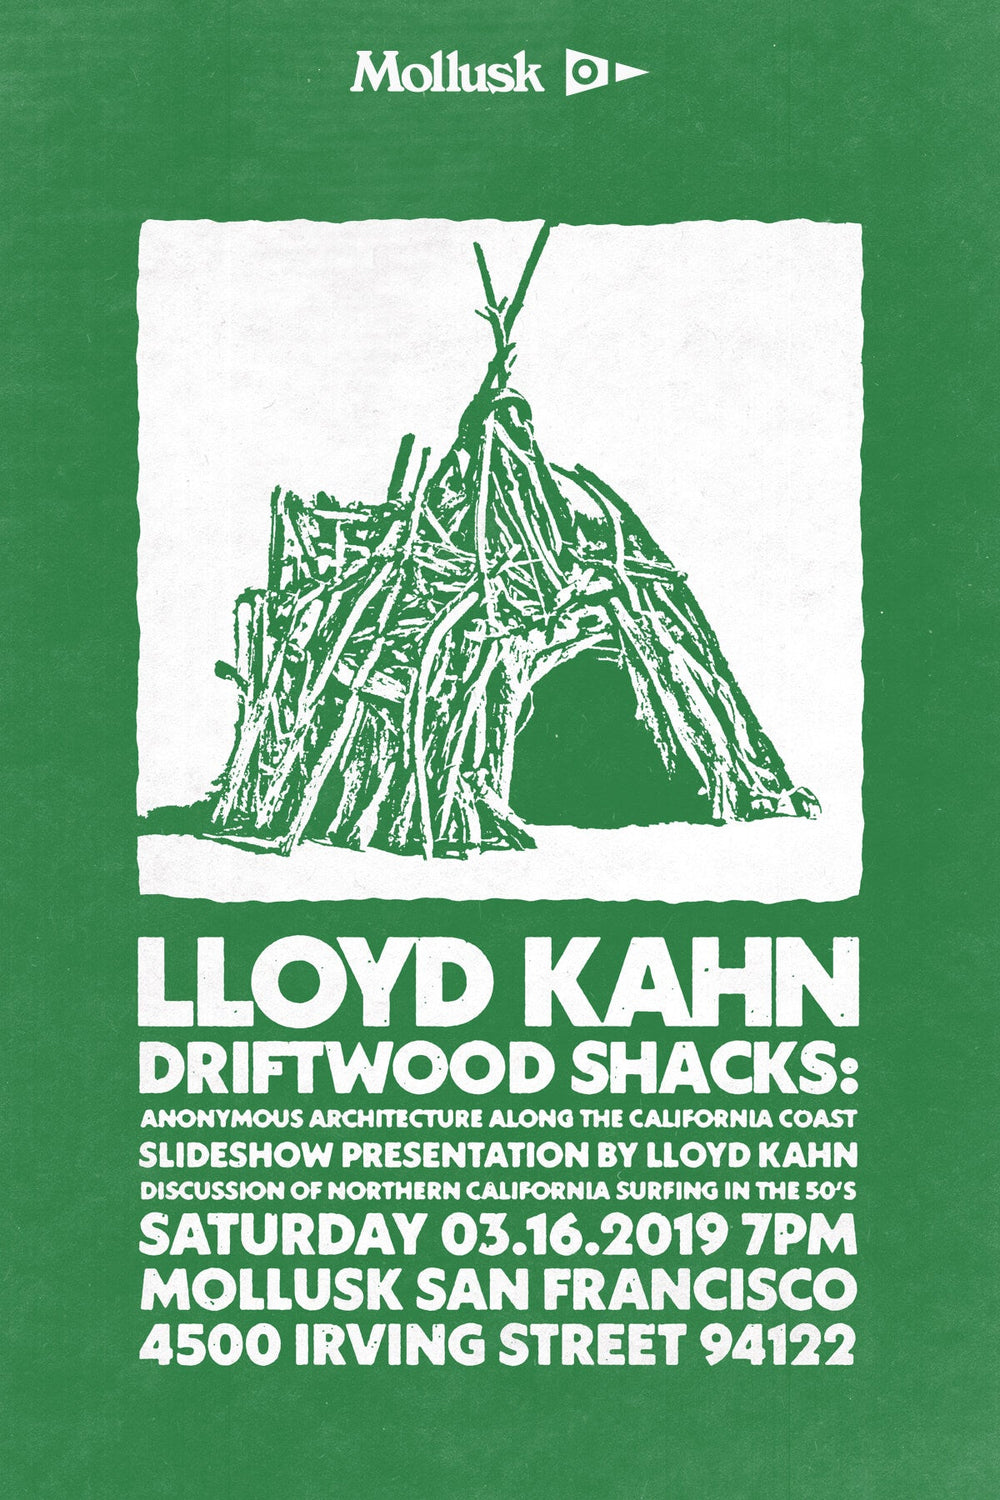 Lloyd Kahn Driftwood Shacks Event at Mollusk SF